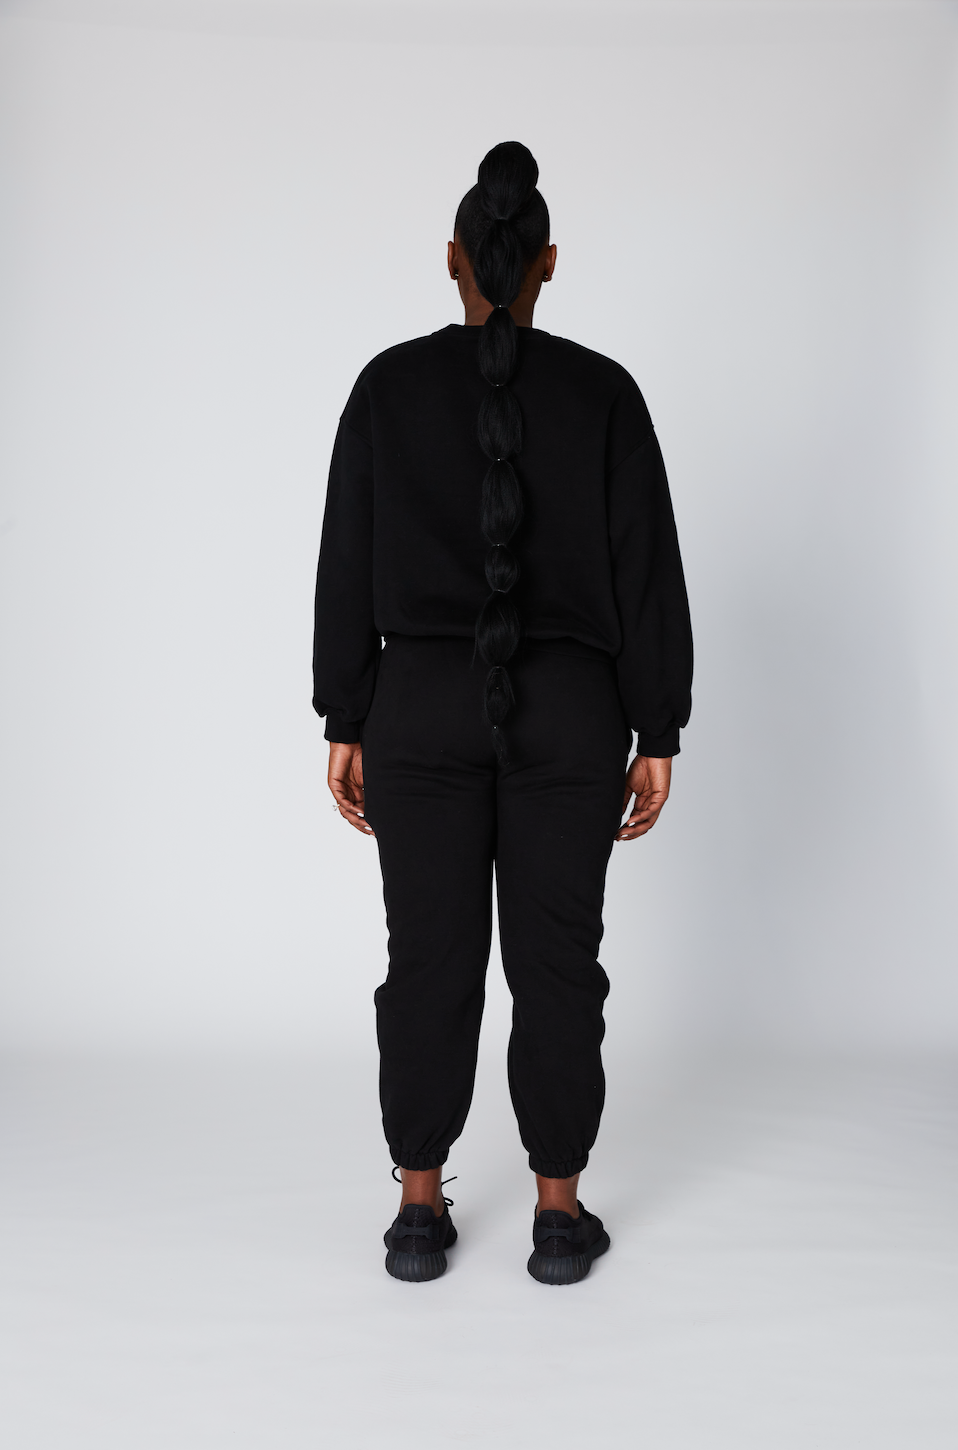 black tracksuit pants and jumper set for women -  black trackpants and black jumper - kate galliano activewear